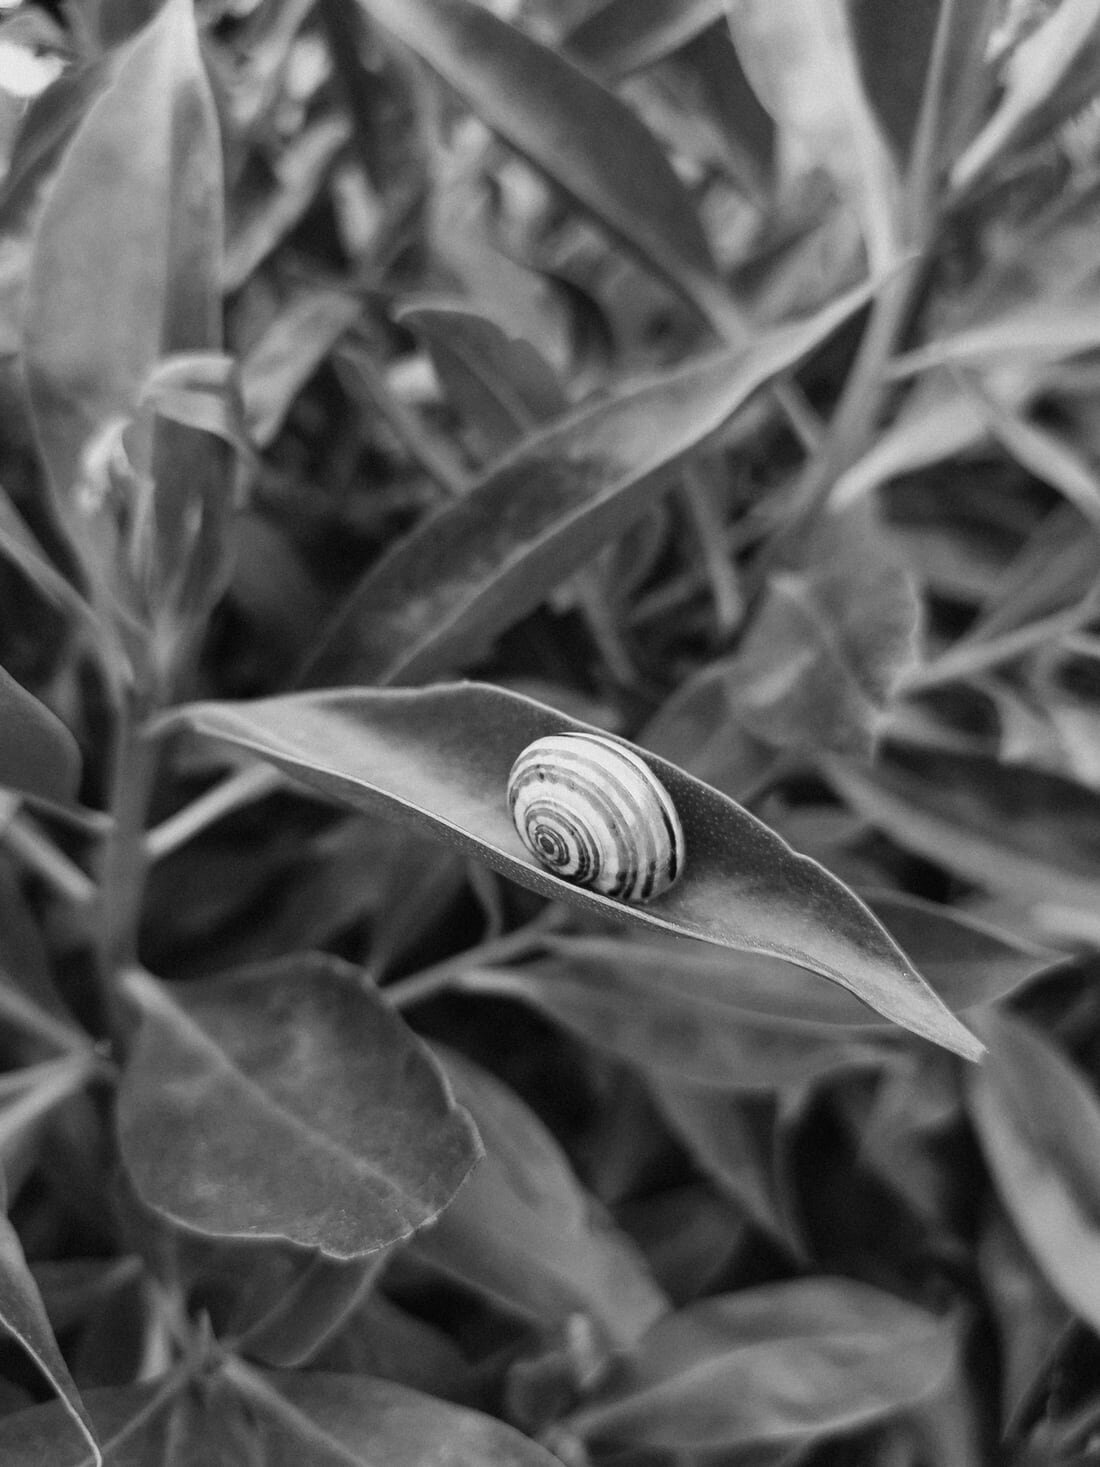 A striped snail on a leaf.